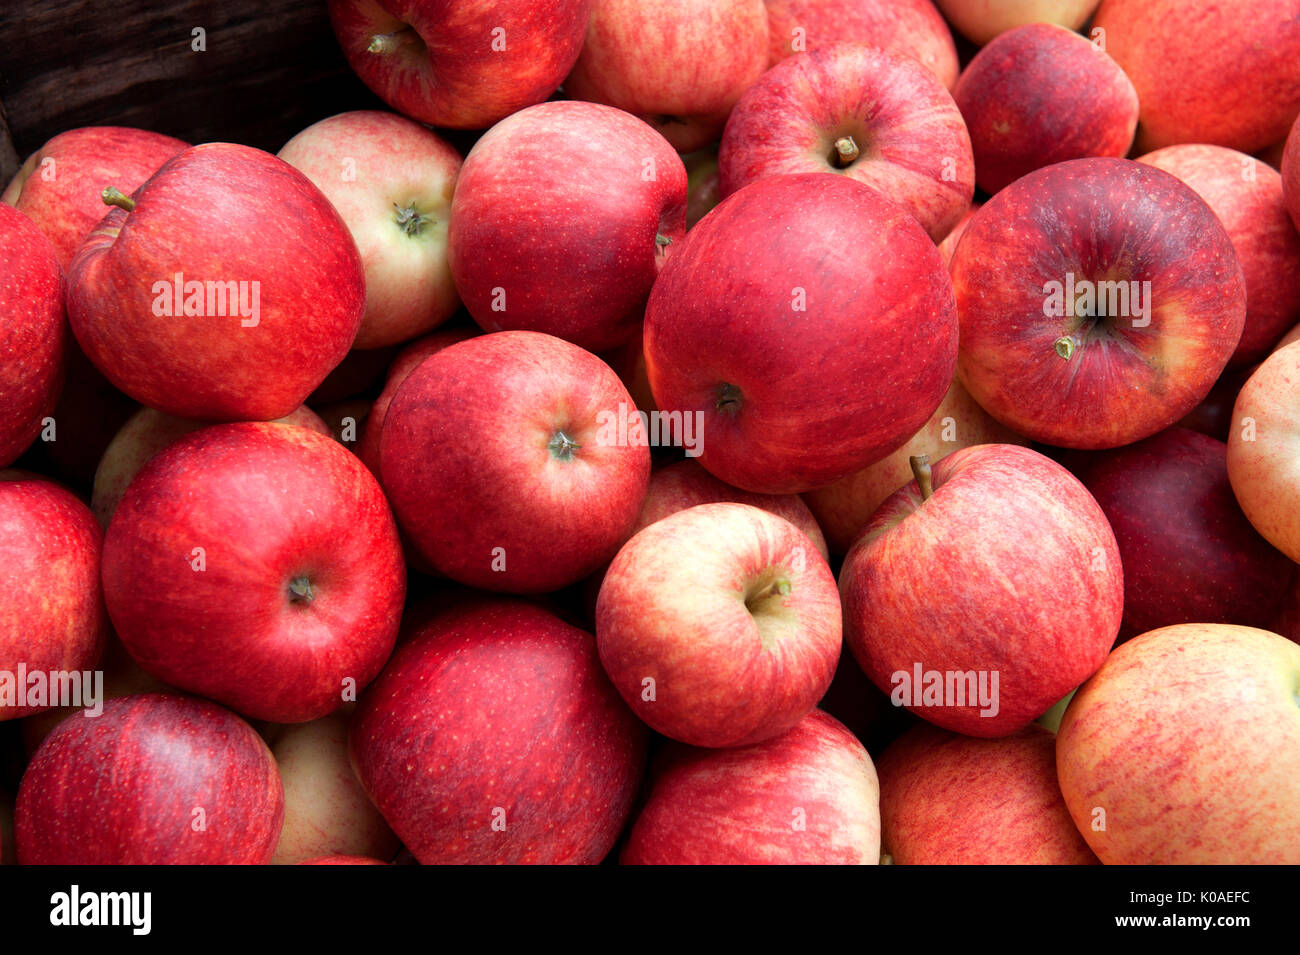 Gala apples Stock Photo